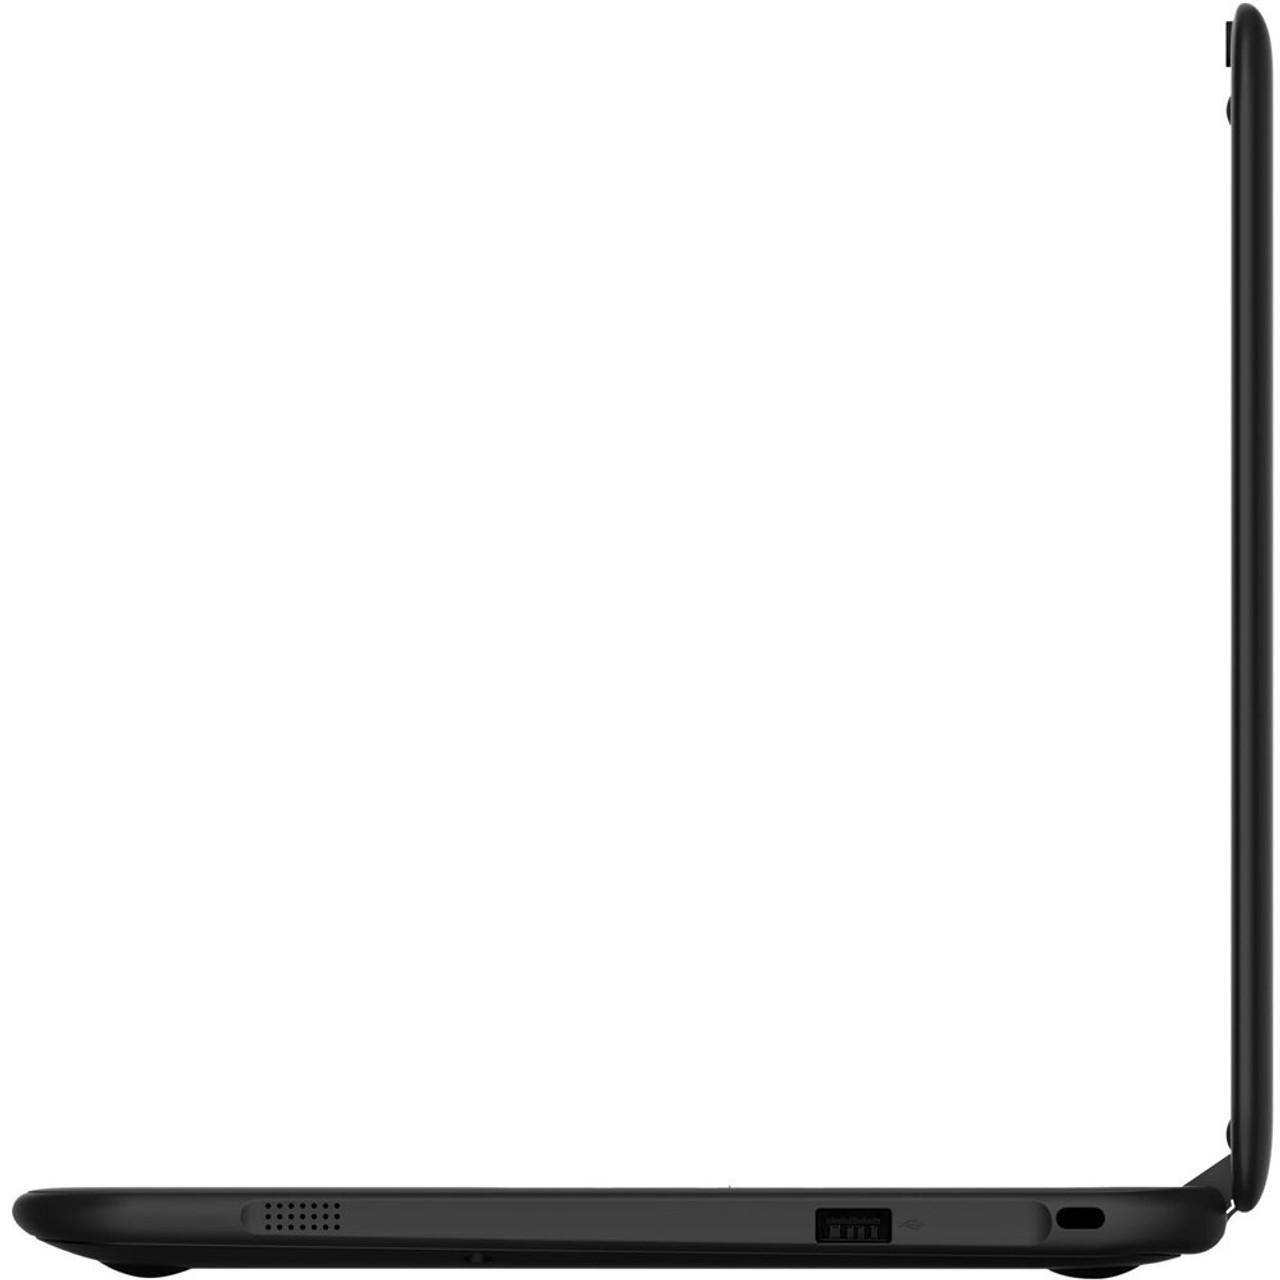 Lenovo N22-20 Chromebook 11.6" Intel Celeron 1.60 GHz 2 GB 16 GB Chrome OS | Scratch & Dent